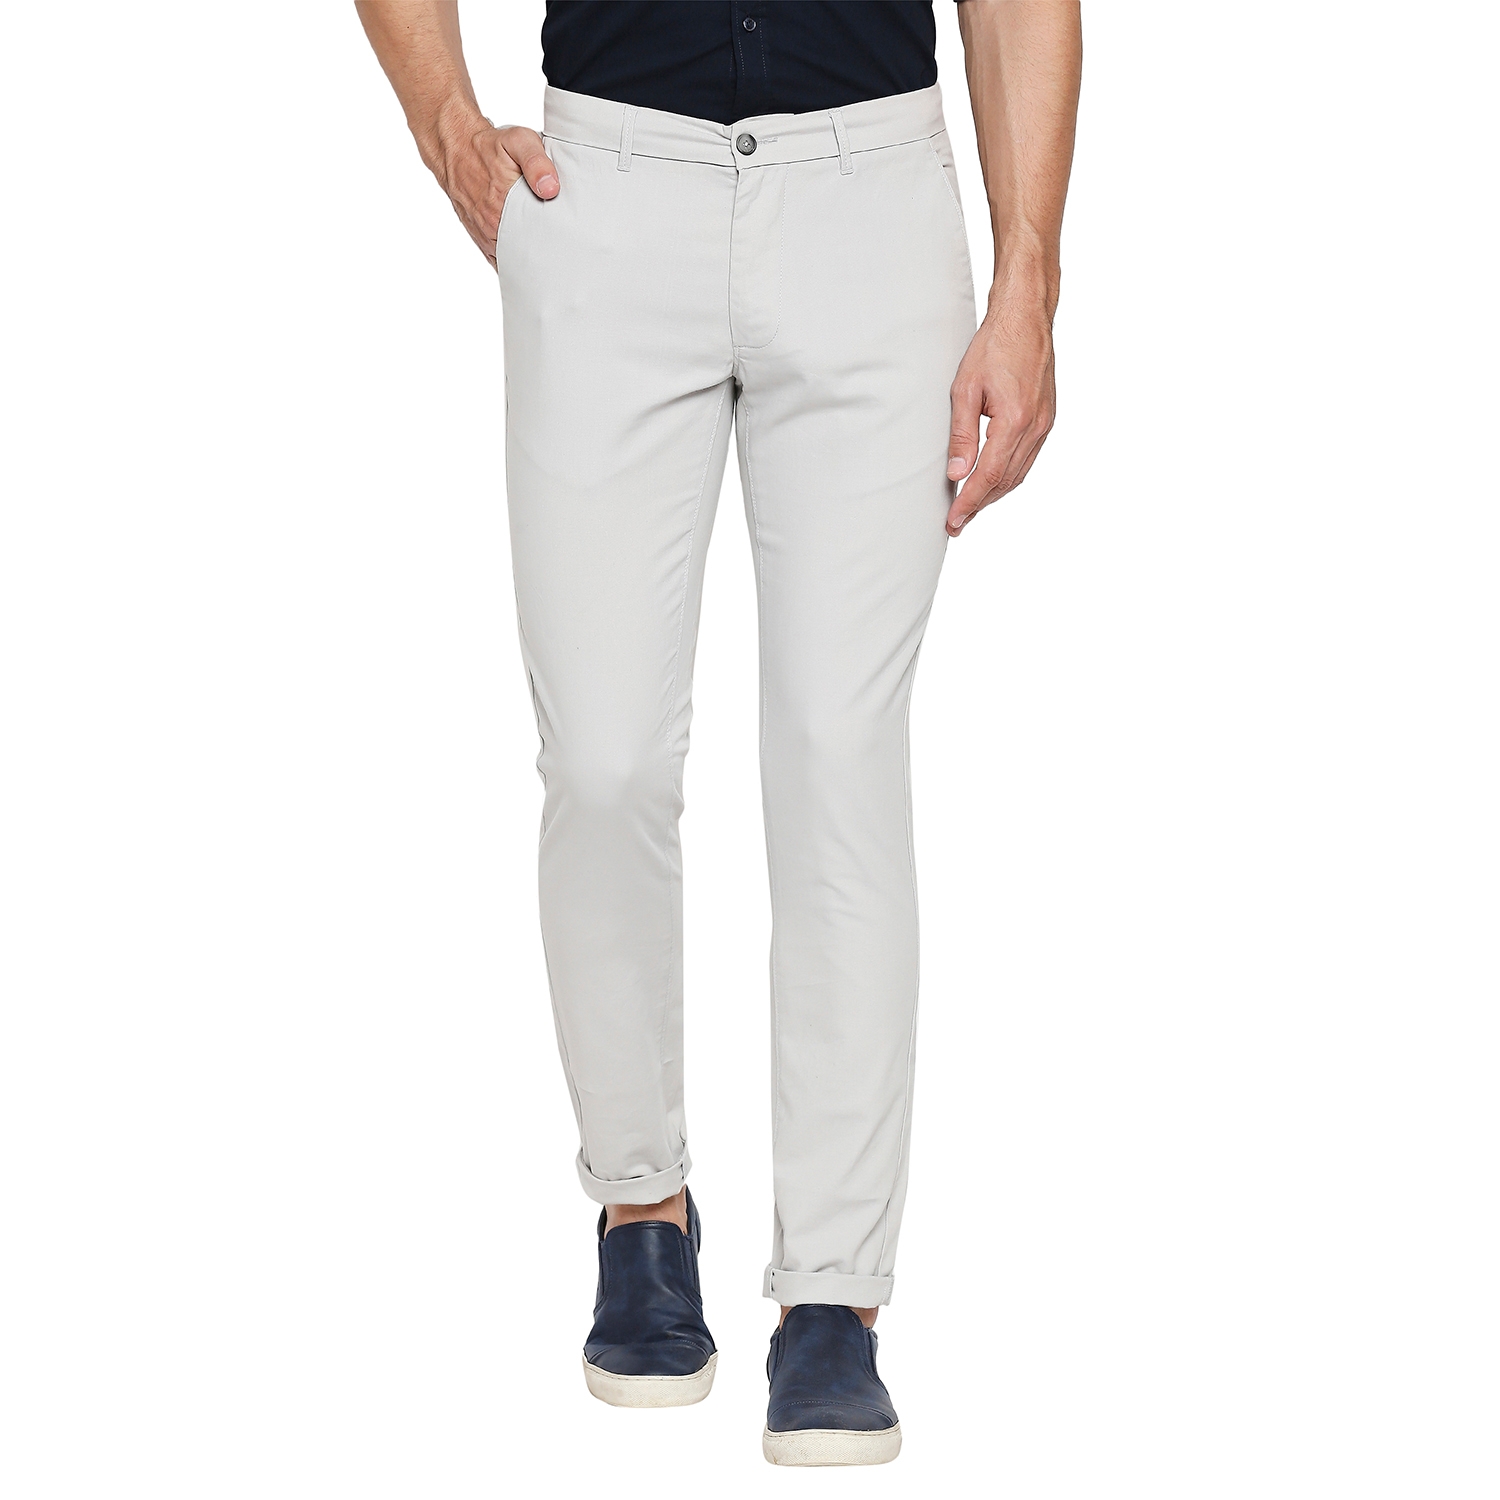 Basics | Men's Light Grey Cotton Blend Solid Trouser 0